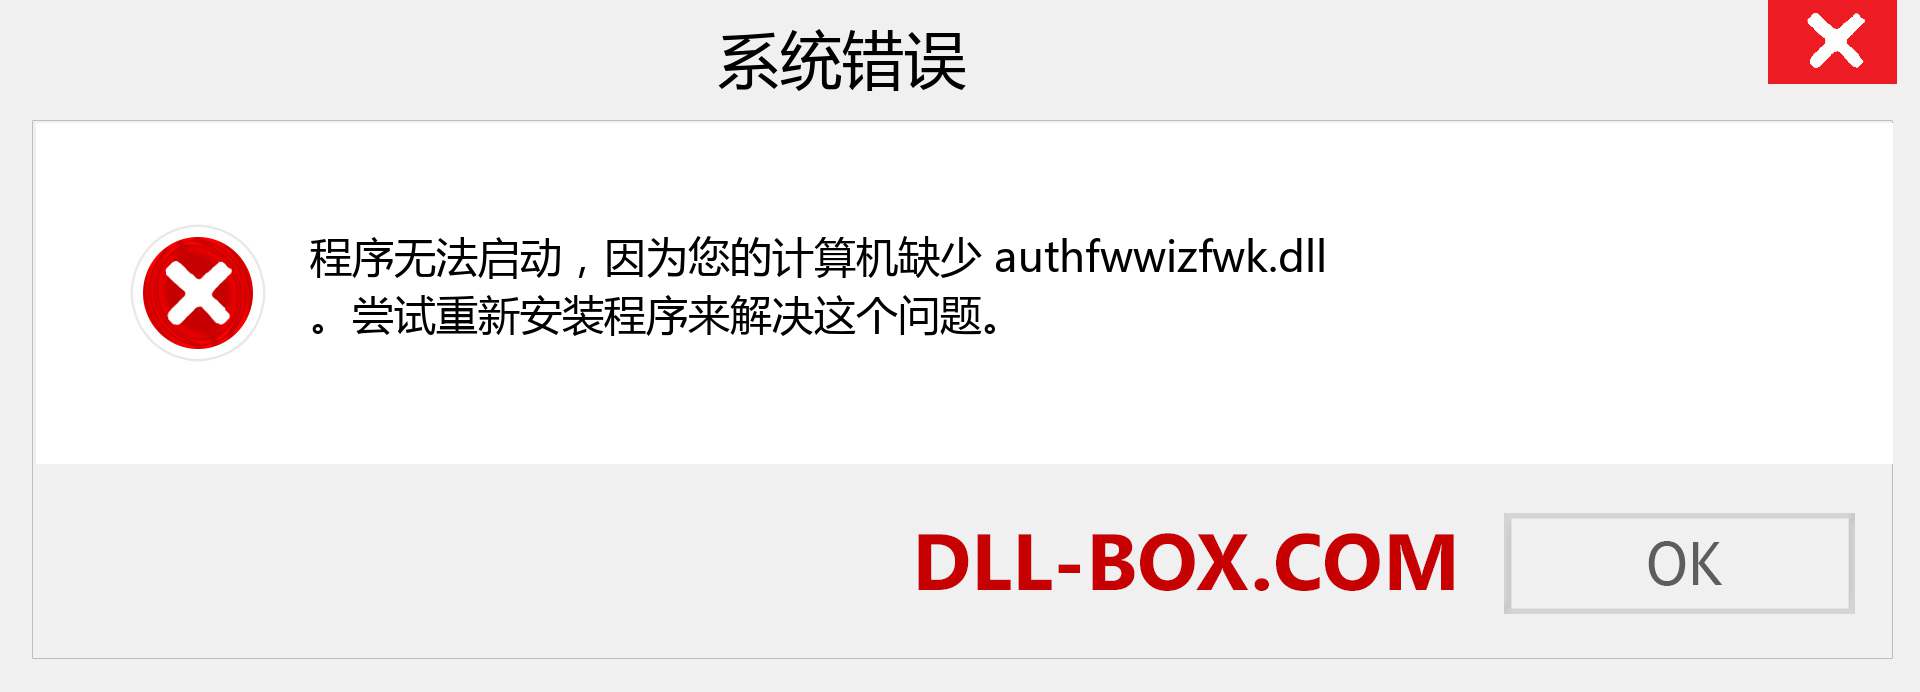 authfwwizfwk.dll 文件丢失？。 适用于 Windows 7、8、10 的下载 - 修复 Windows、照片、图像上的 authfwwizfwk dll 丢失错误